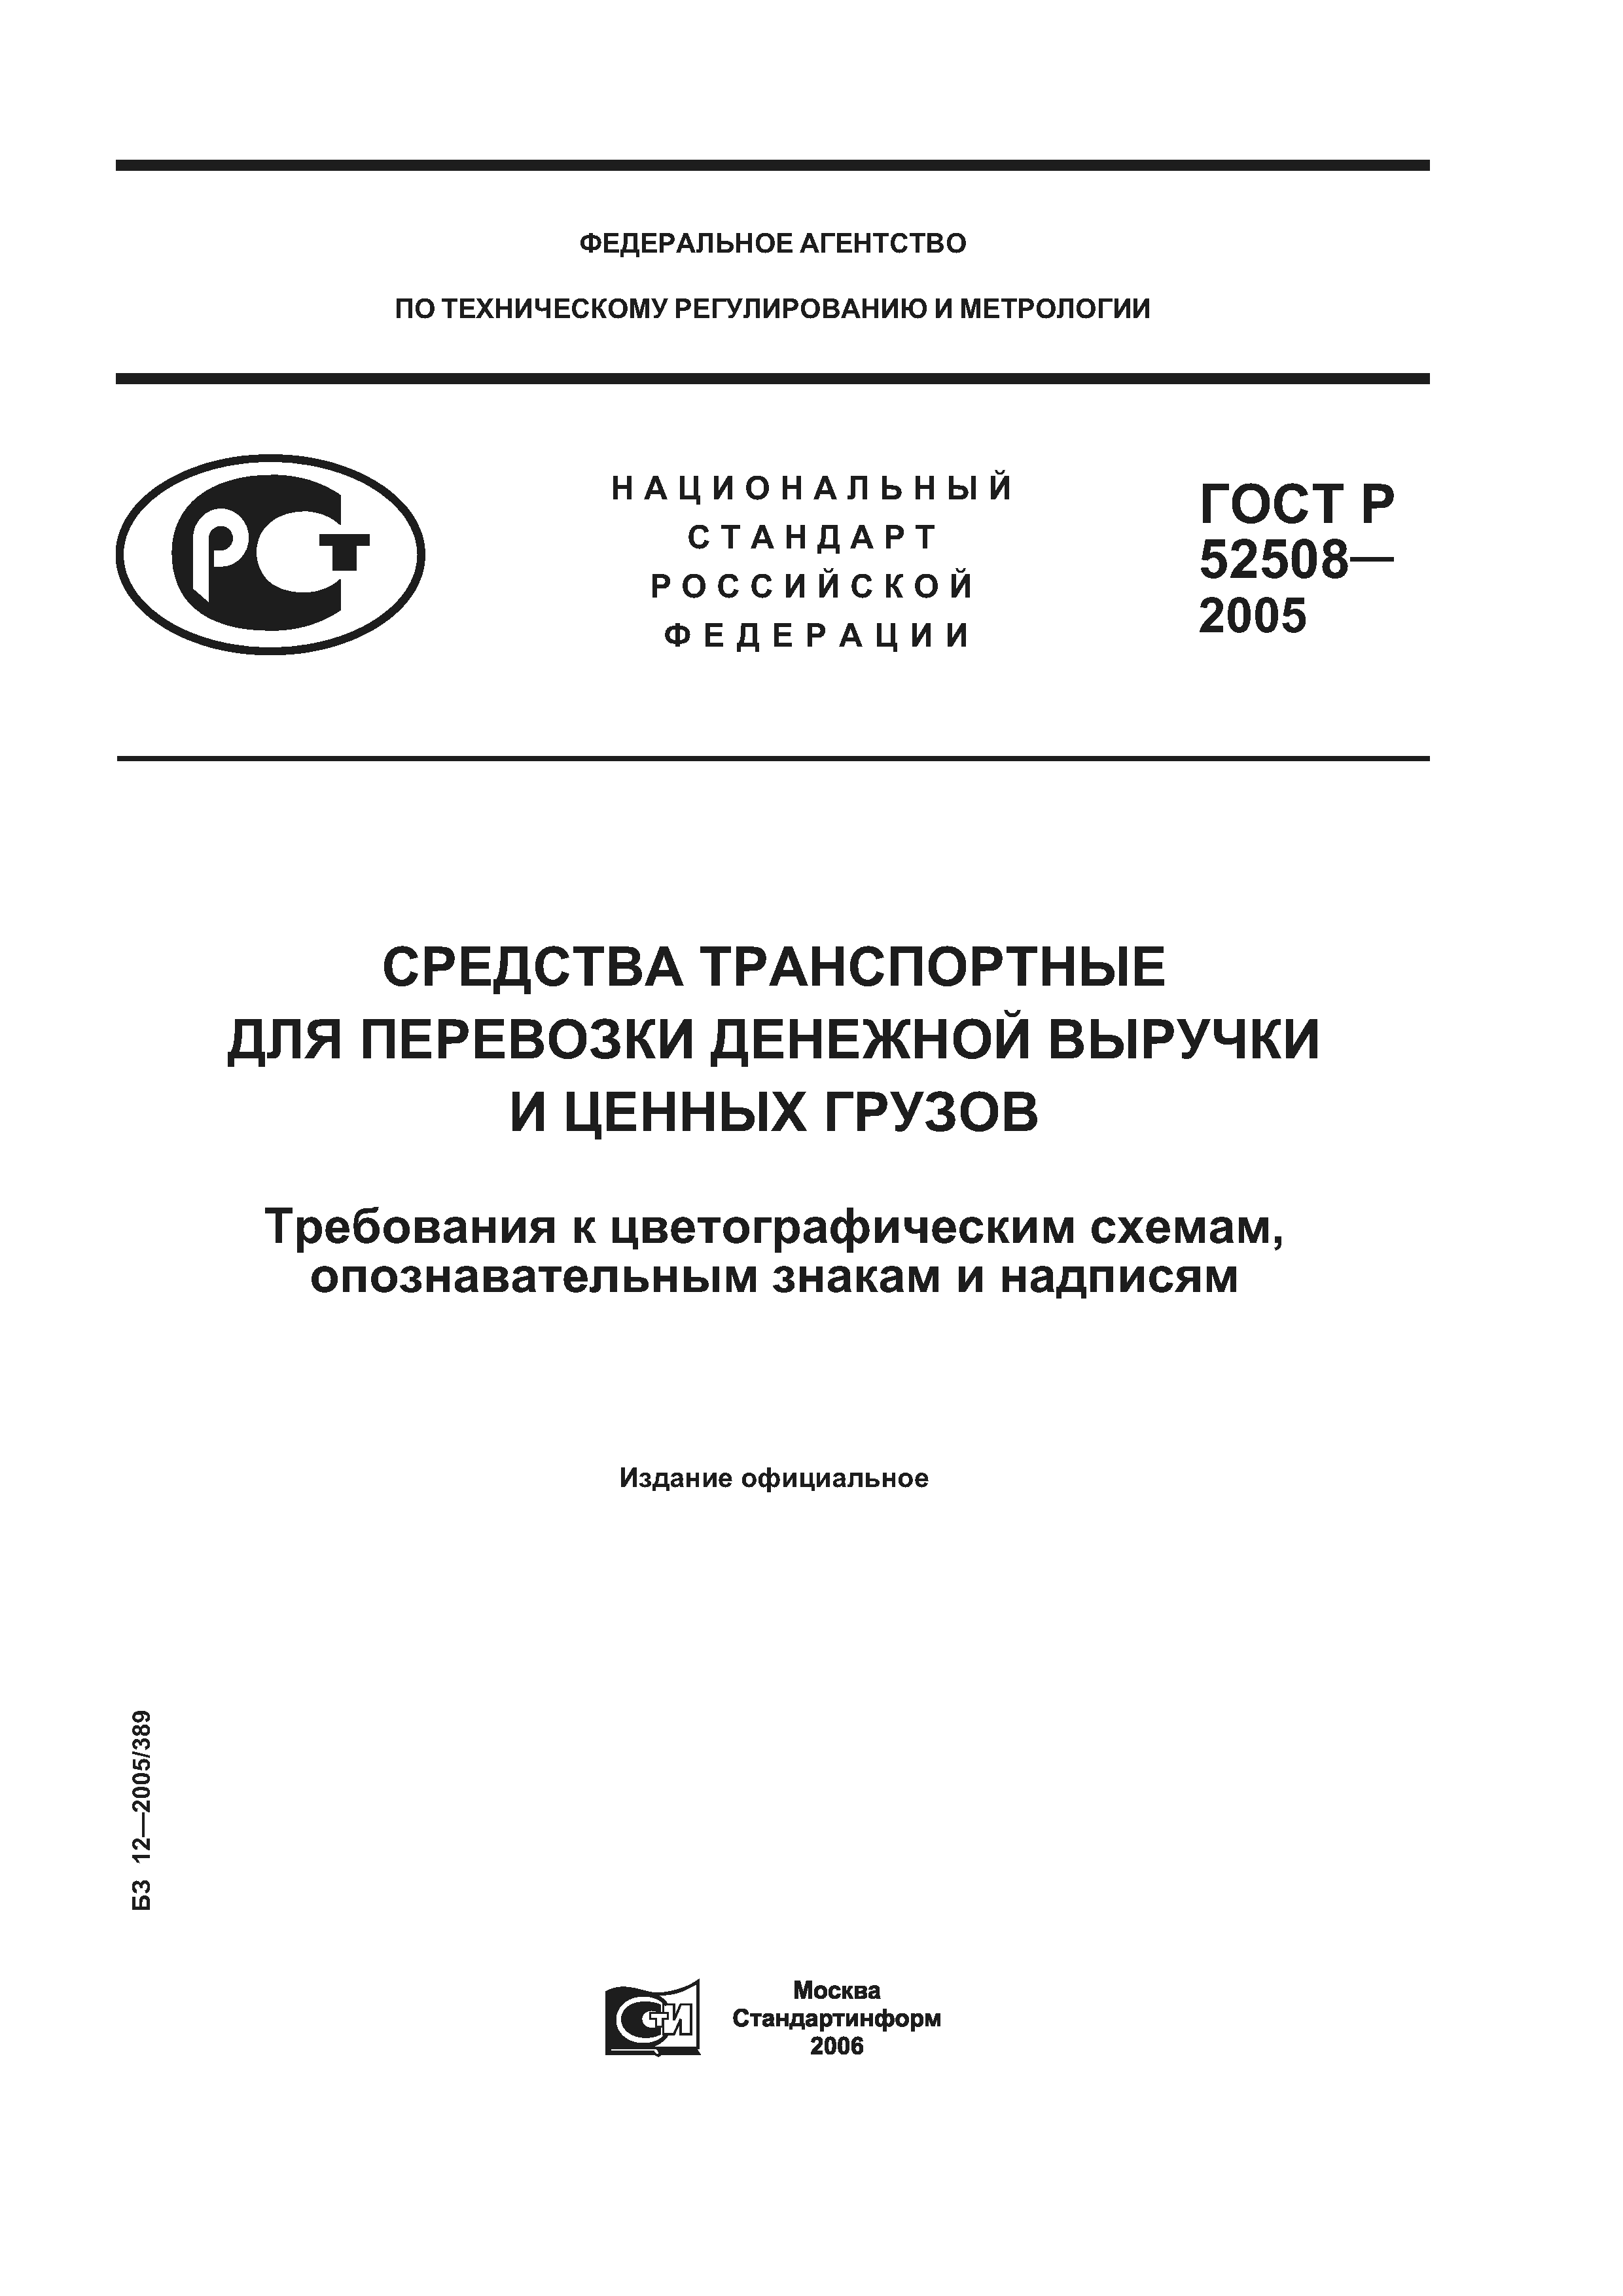 ГОСТ Р 52508-2005